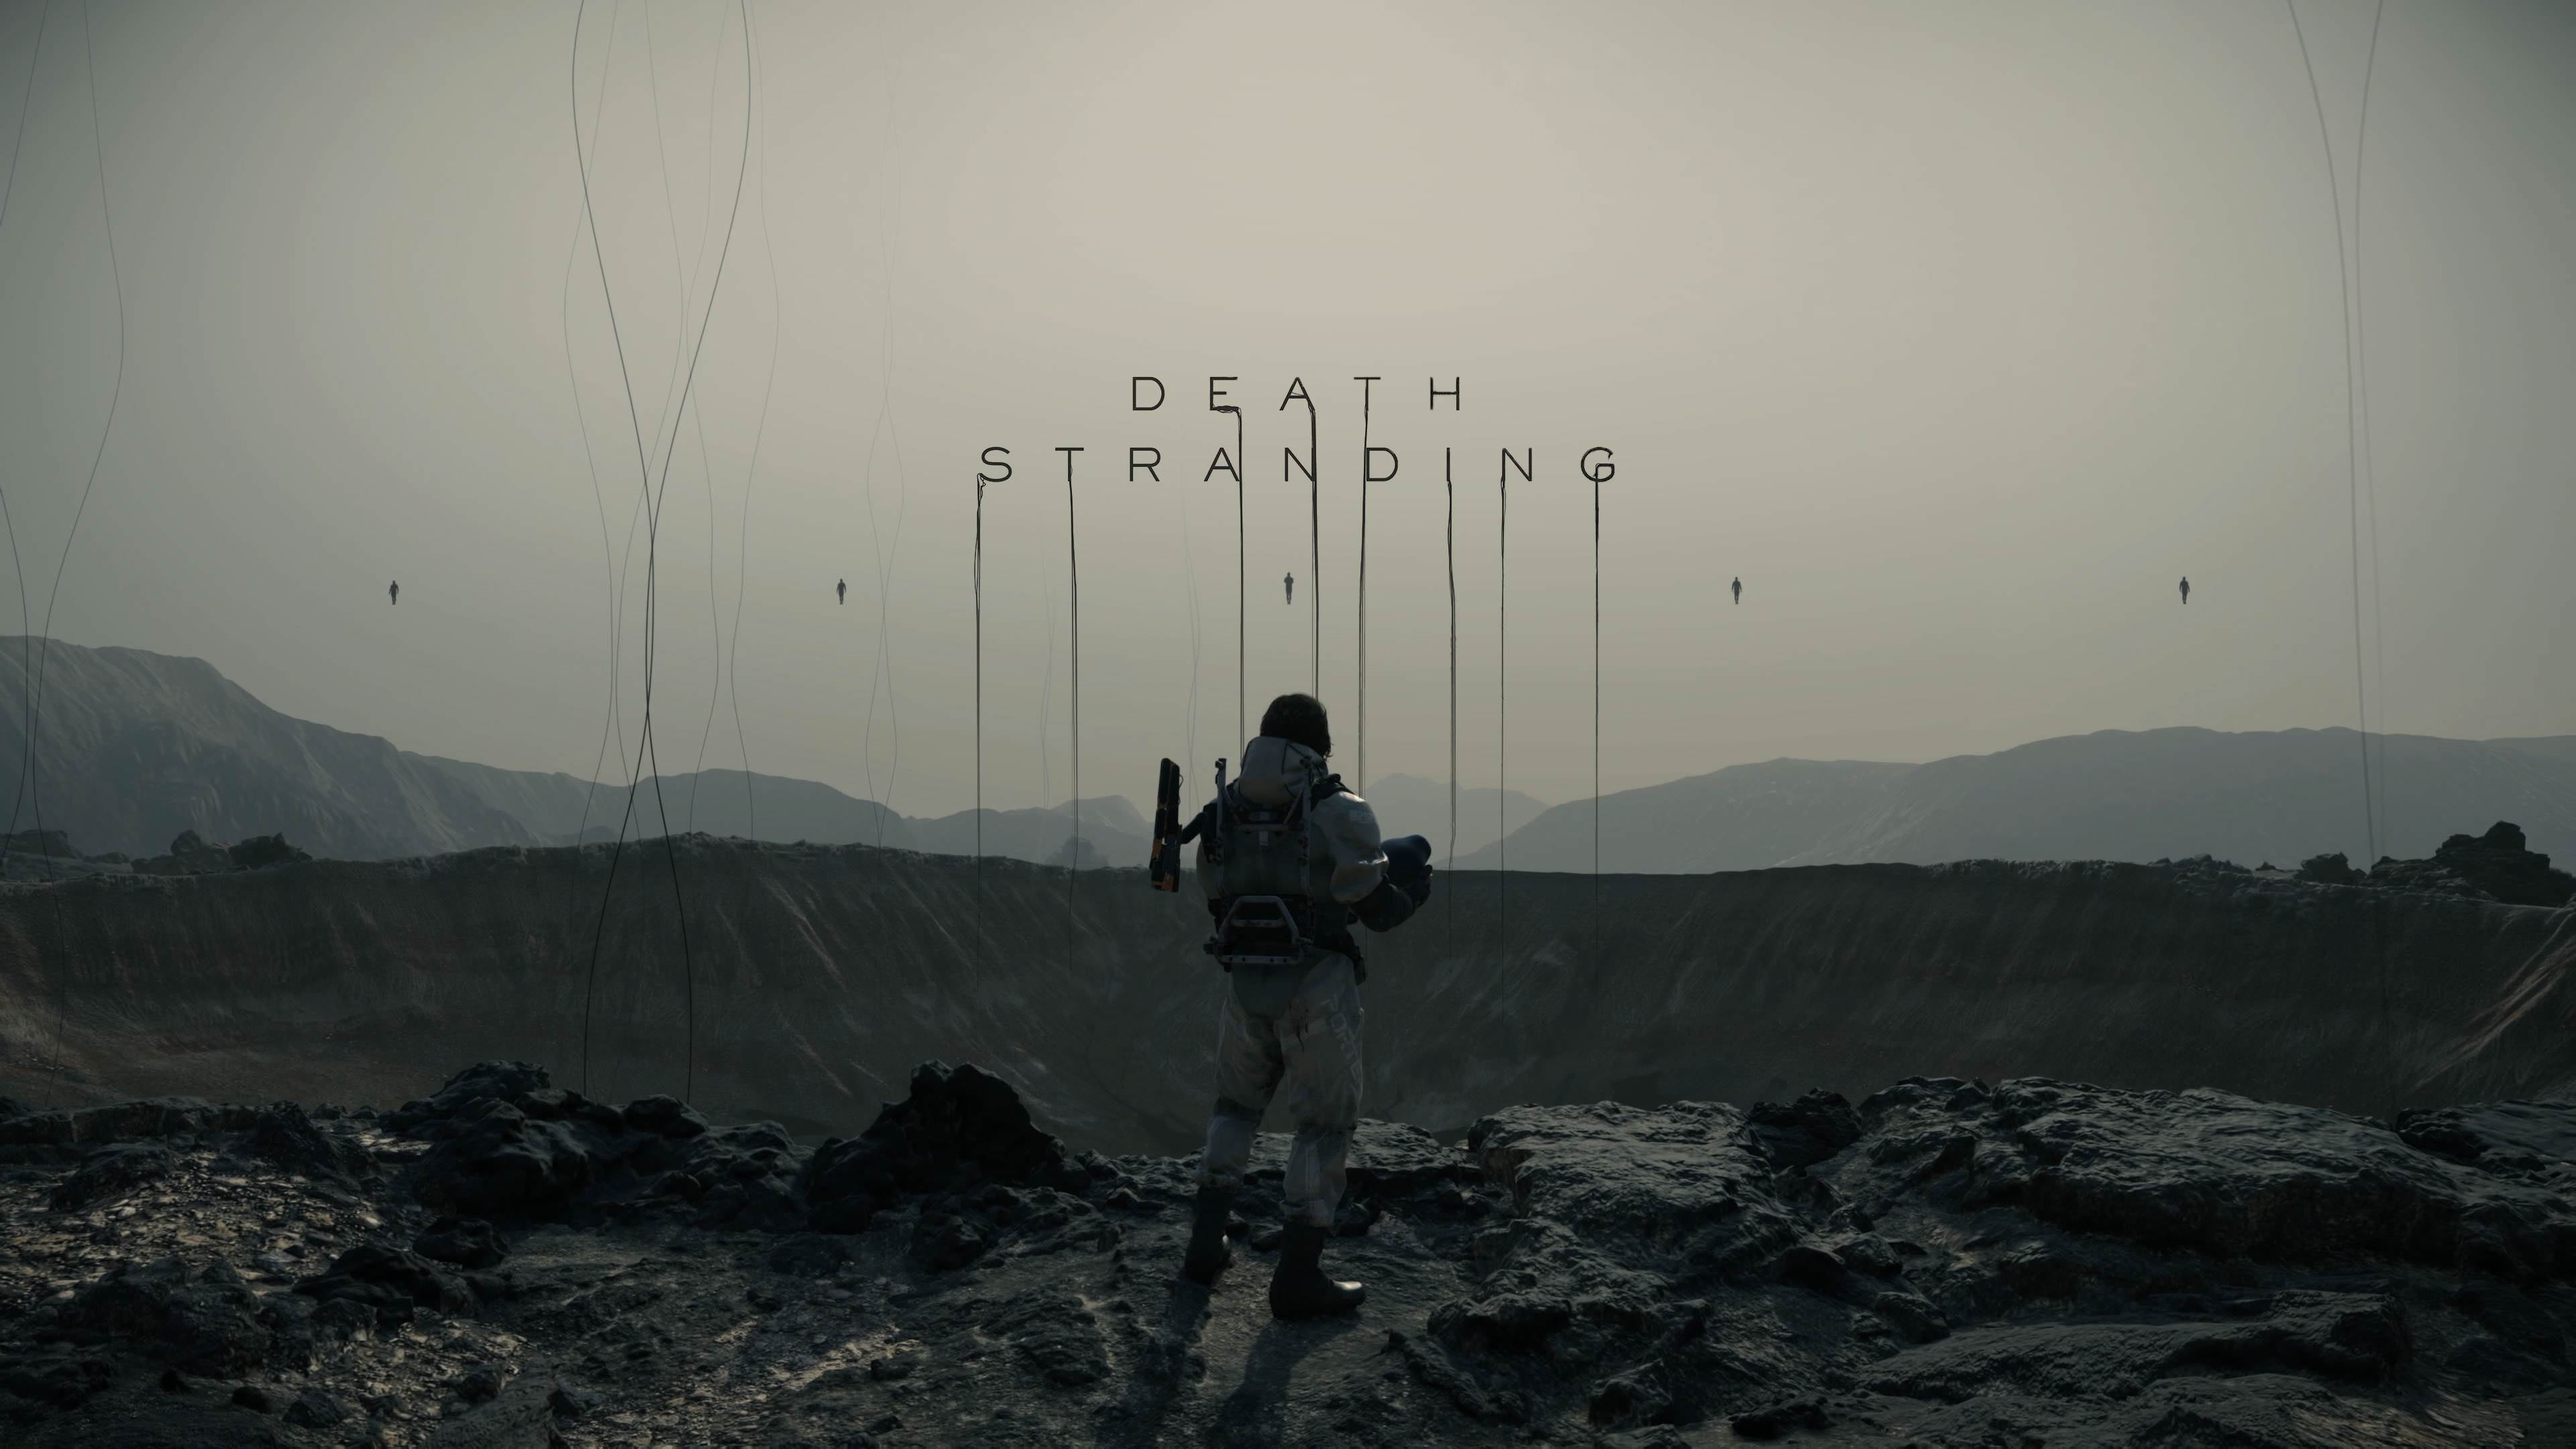 Death Stranding, games art, video game art, video games, Hideo Kojima